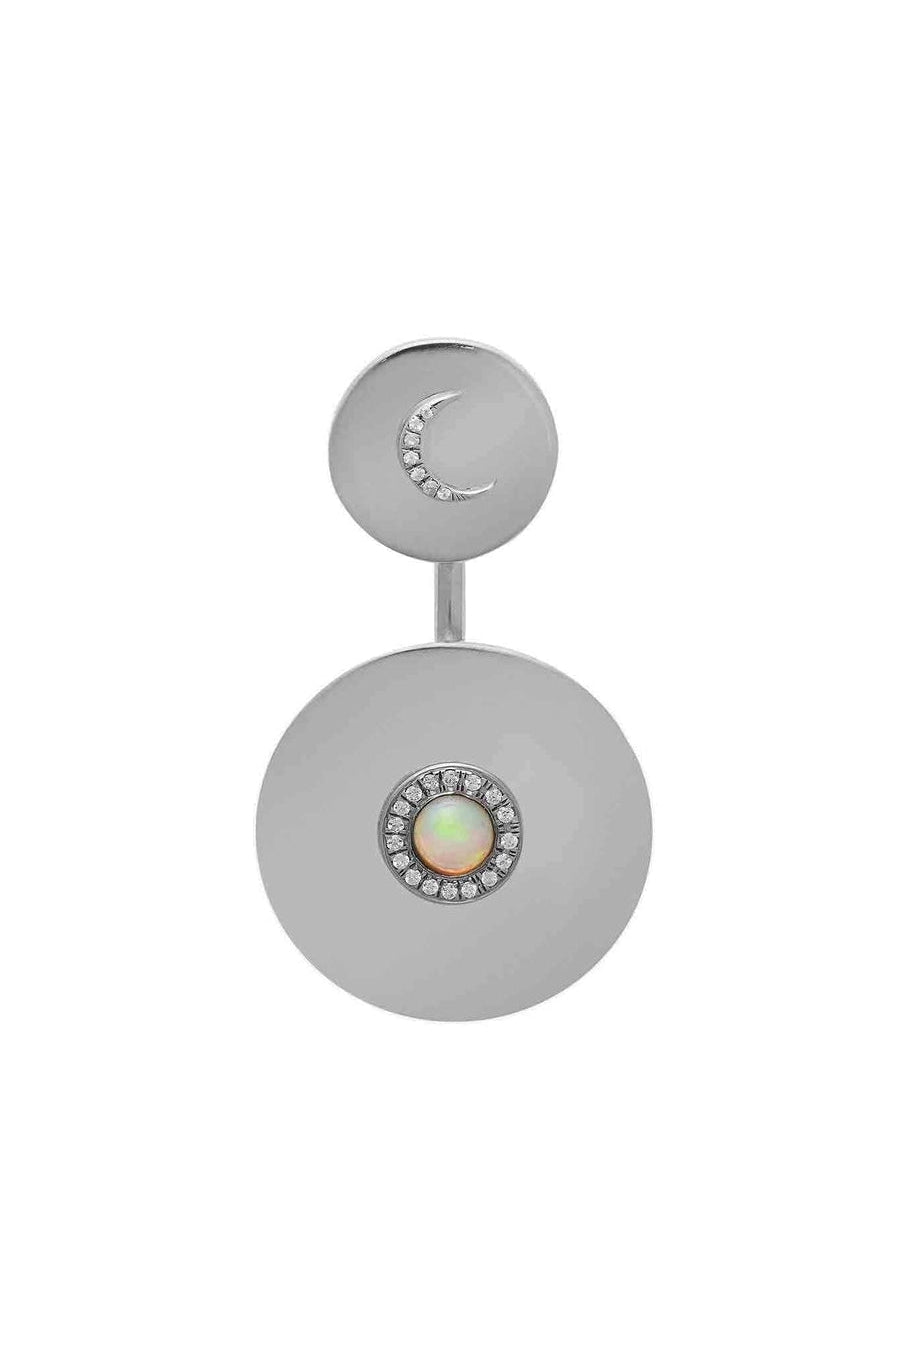 Moon Around Sun Earring-Jewellery-Eye M-OS-Opal/Sapphire Silver Ox-A2.0192.42.1158-Debs Boutique